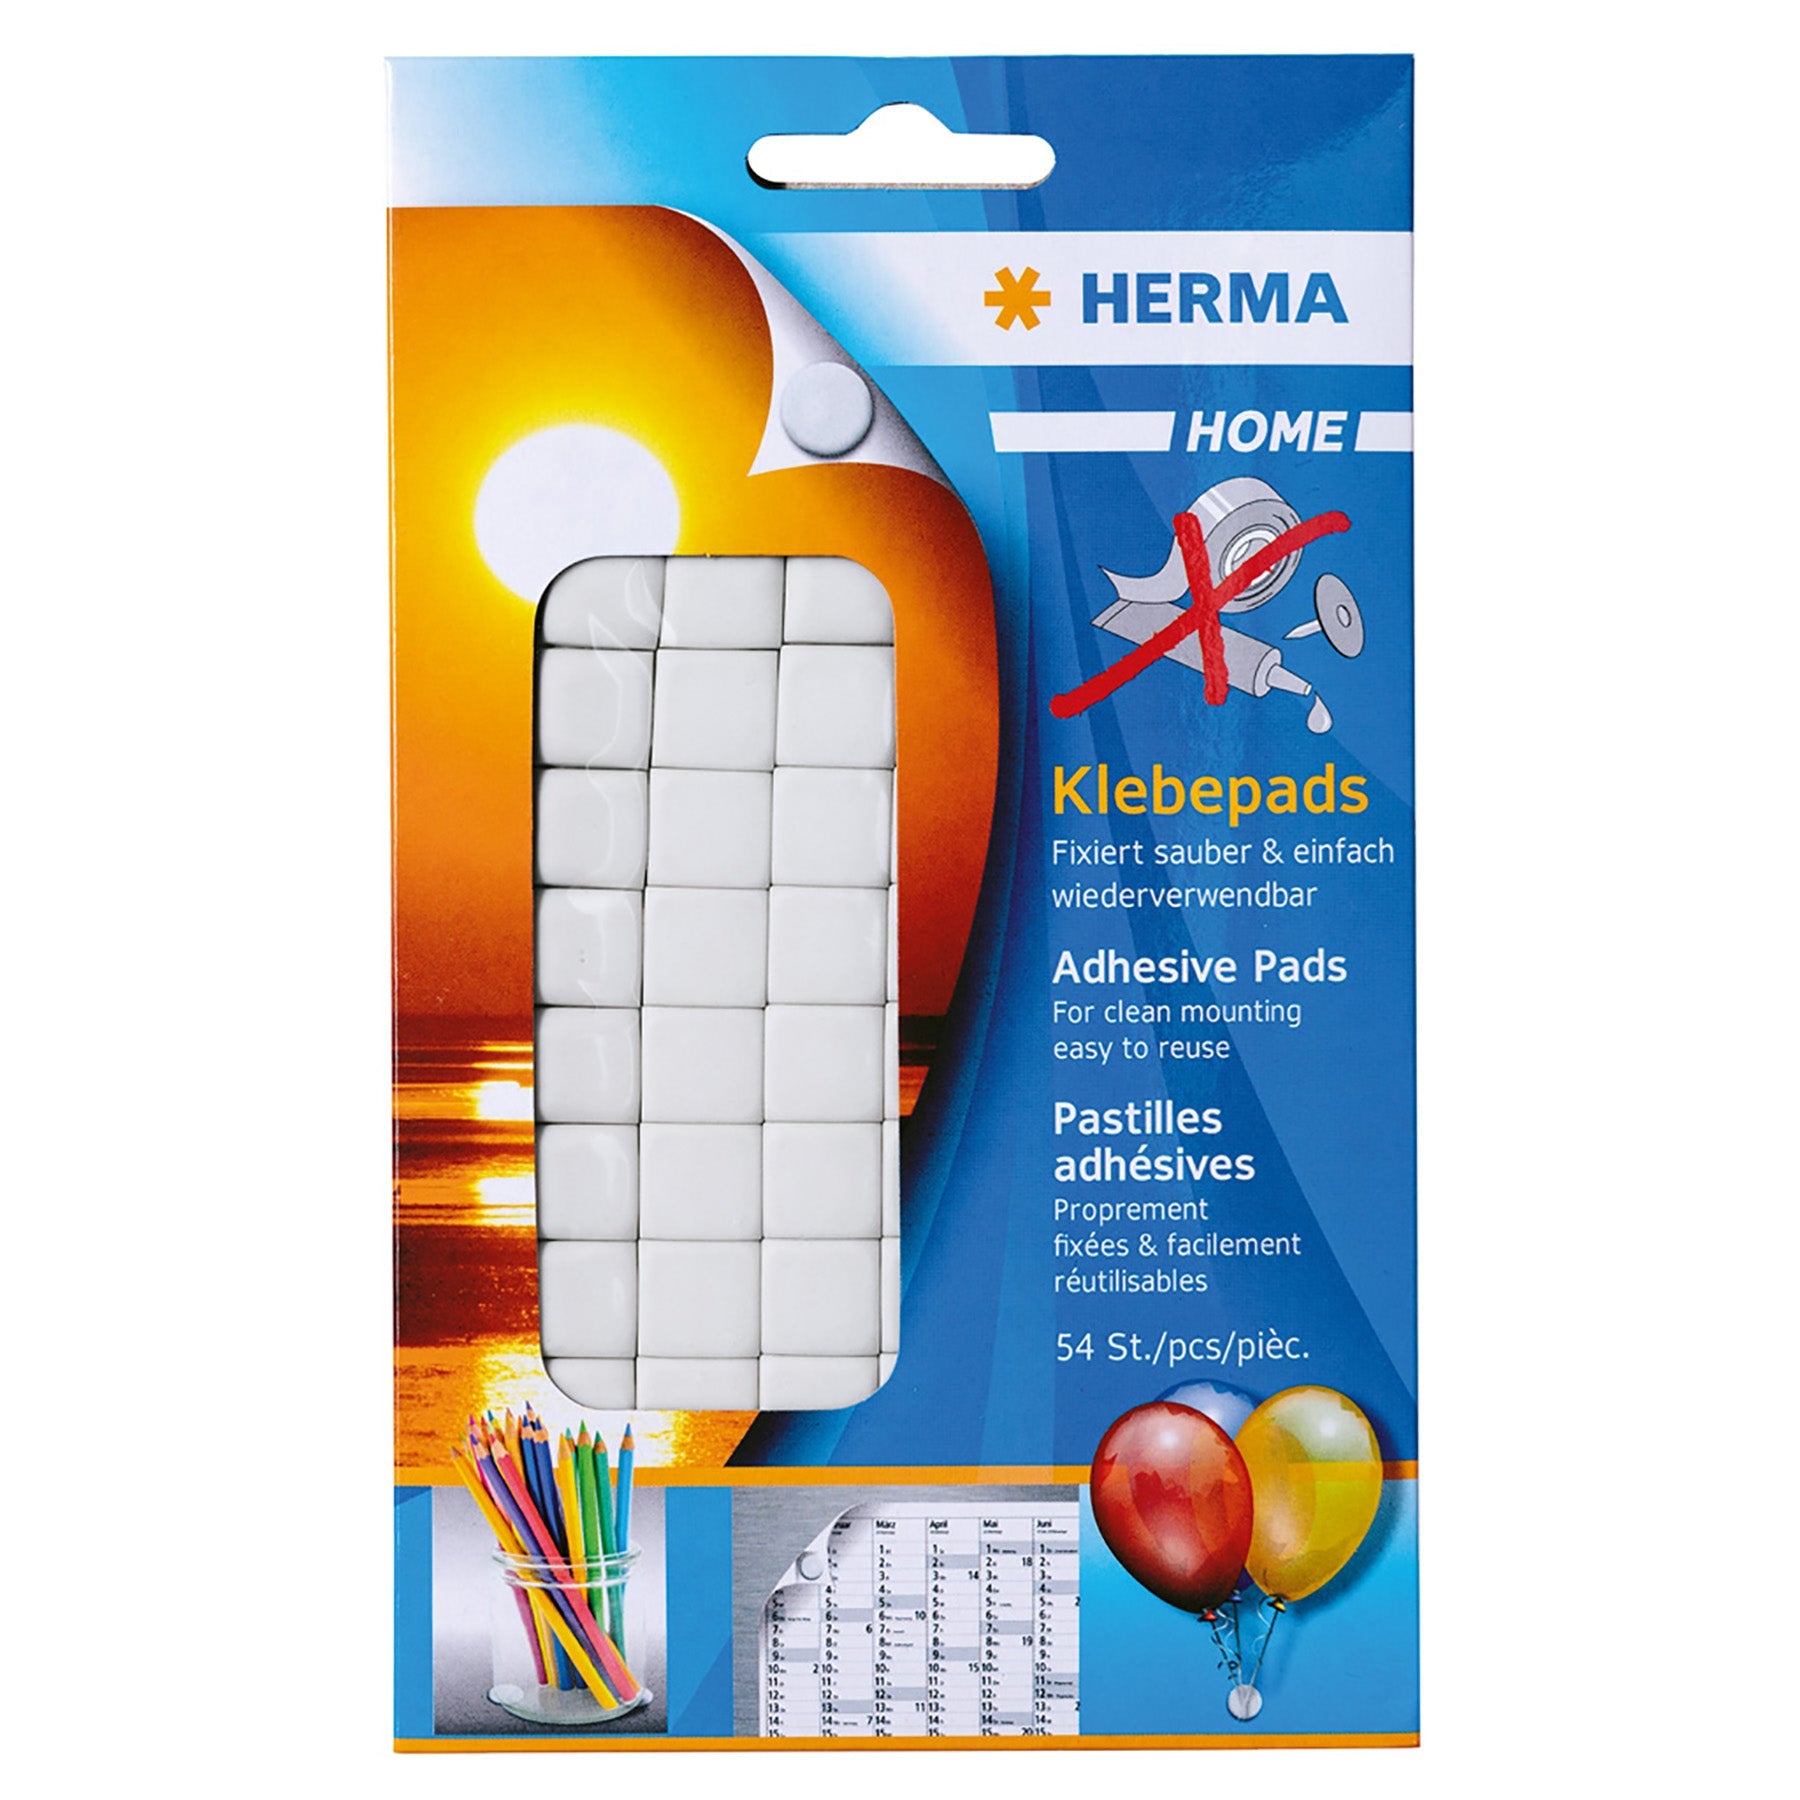 Herma 54pcs Adhesive Pre-cut Tabs White 0.4in Square